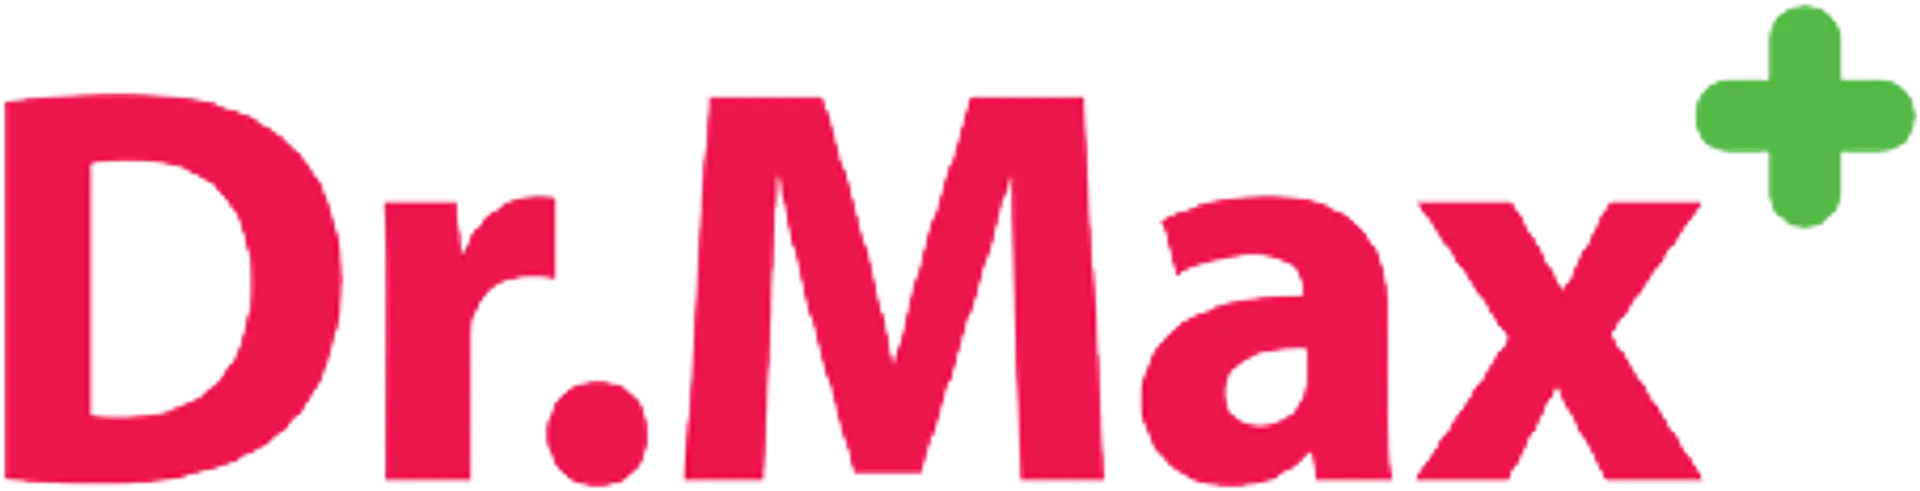 DR. MAX logo of current catalogue